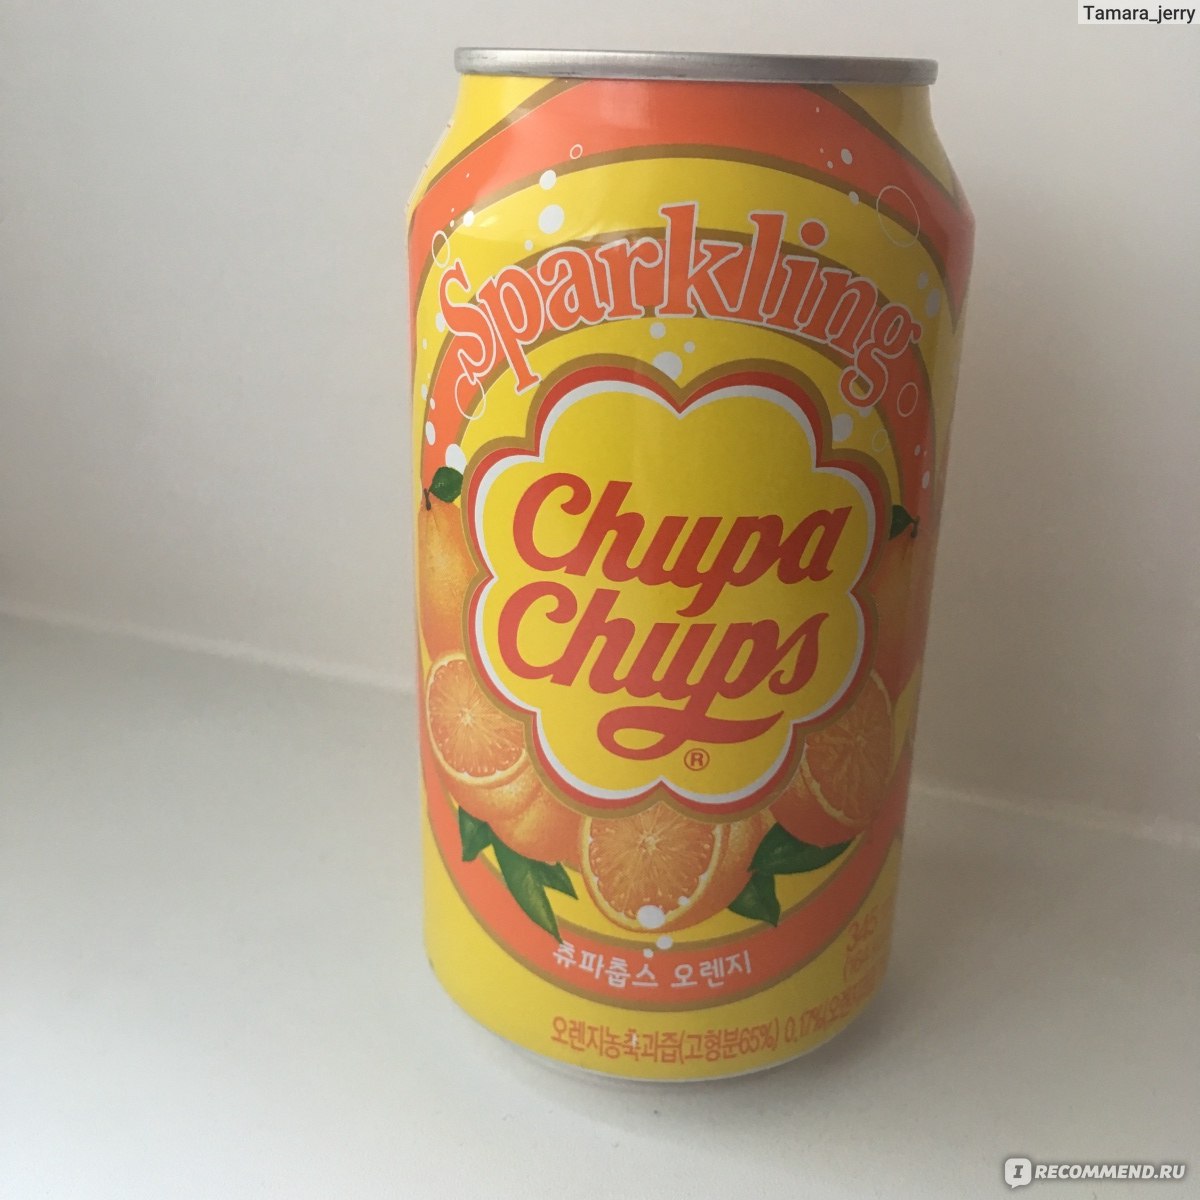 Продолжаю пить Chupa Chups ٩(●*)۶.